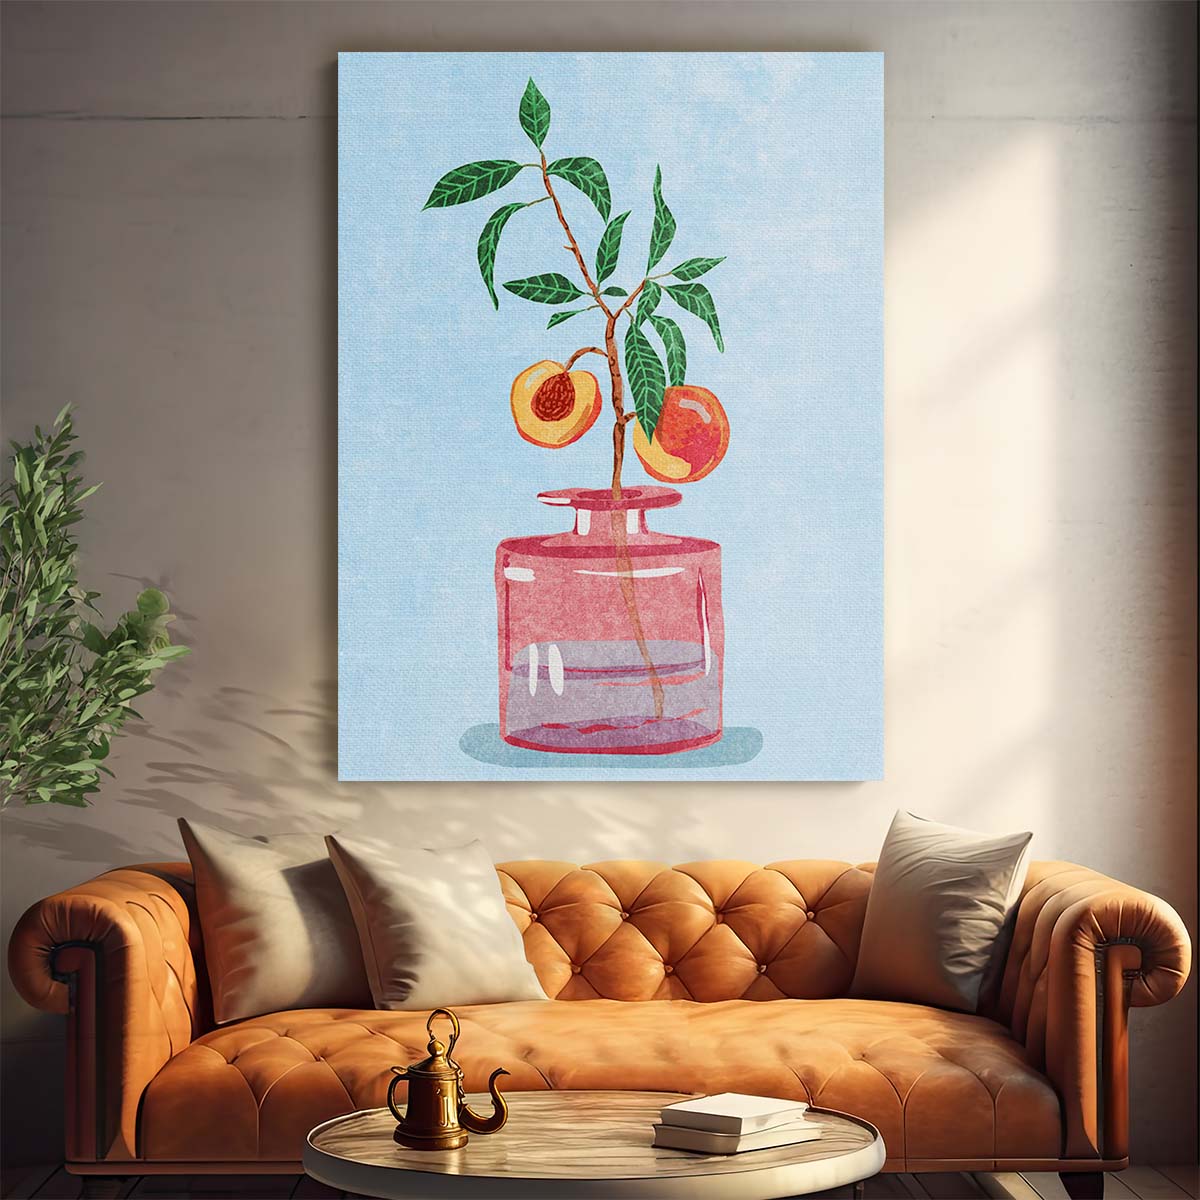 Minimalist Peach Tree Illustration in Vase by Raissa Oltmanns by Luxuriance Designs, made in USA